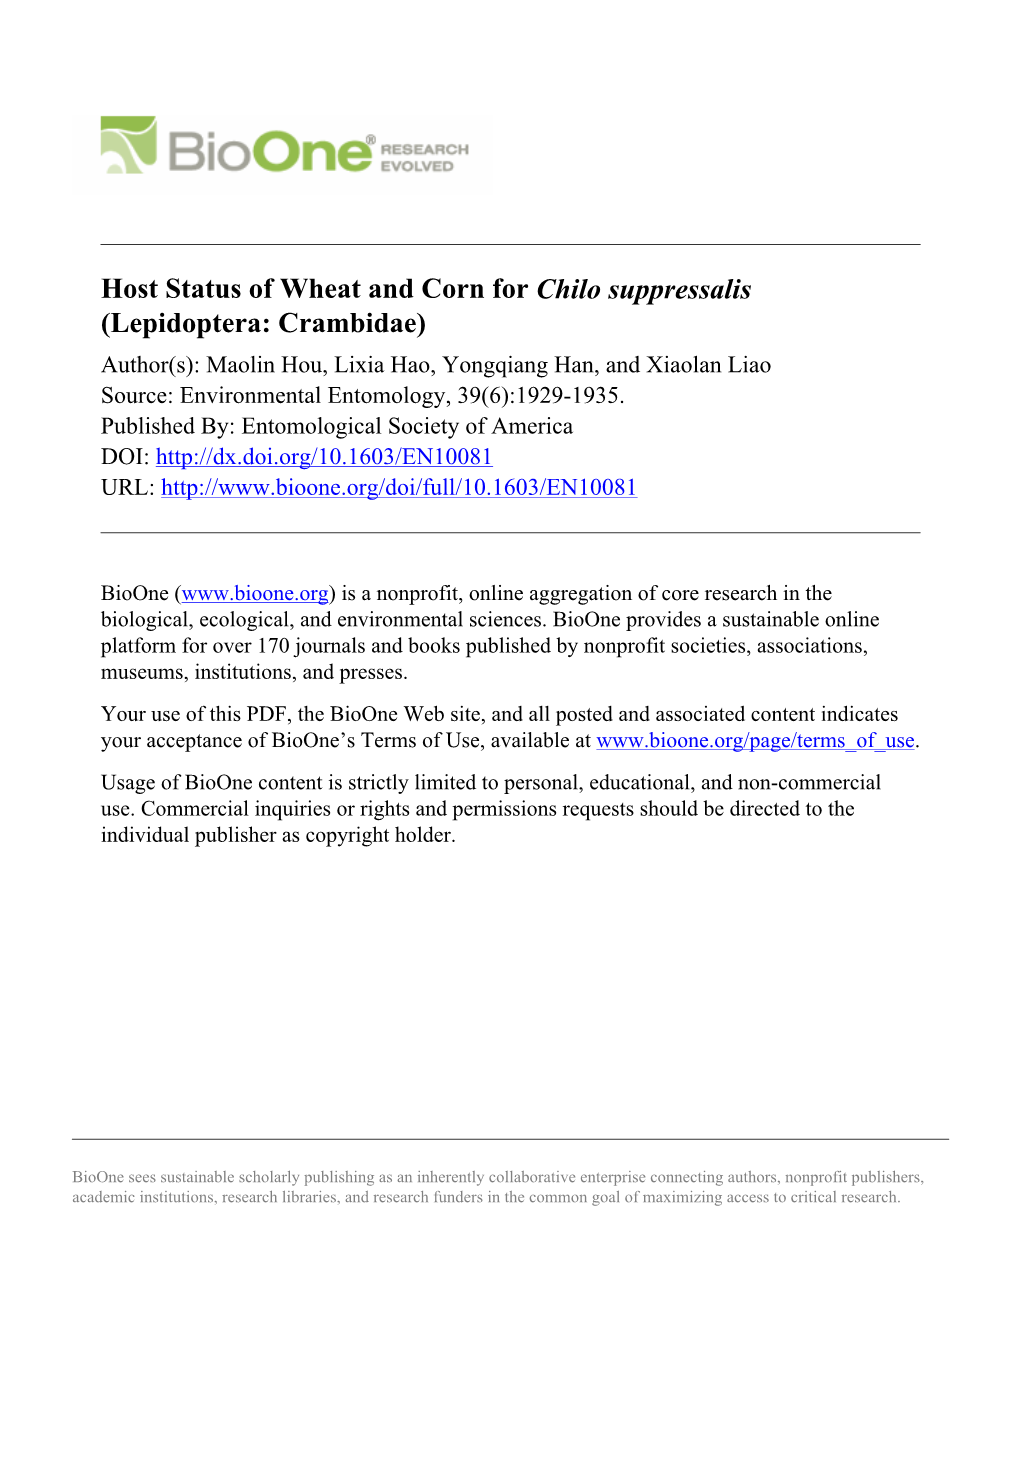 Host Status of Wheat and Corn for Chilo Suppressalis